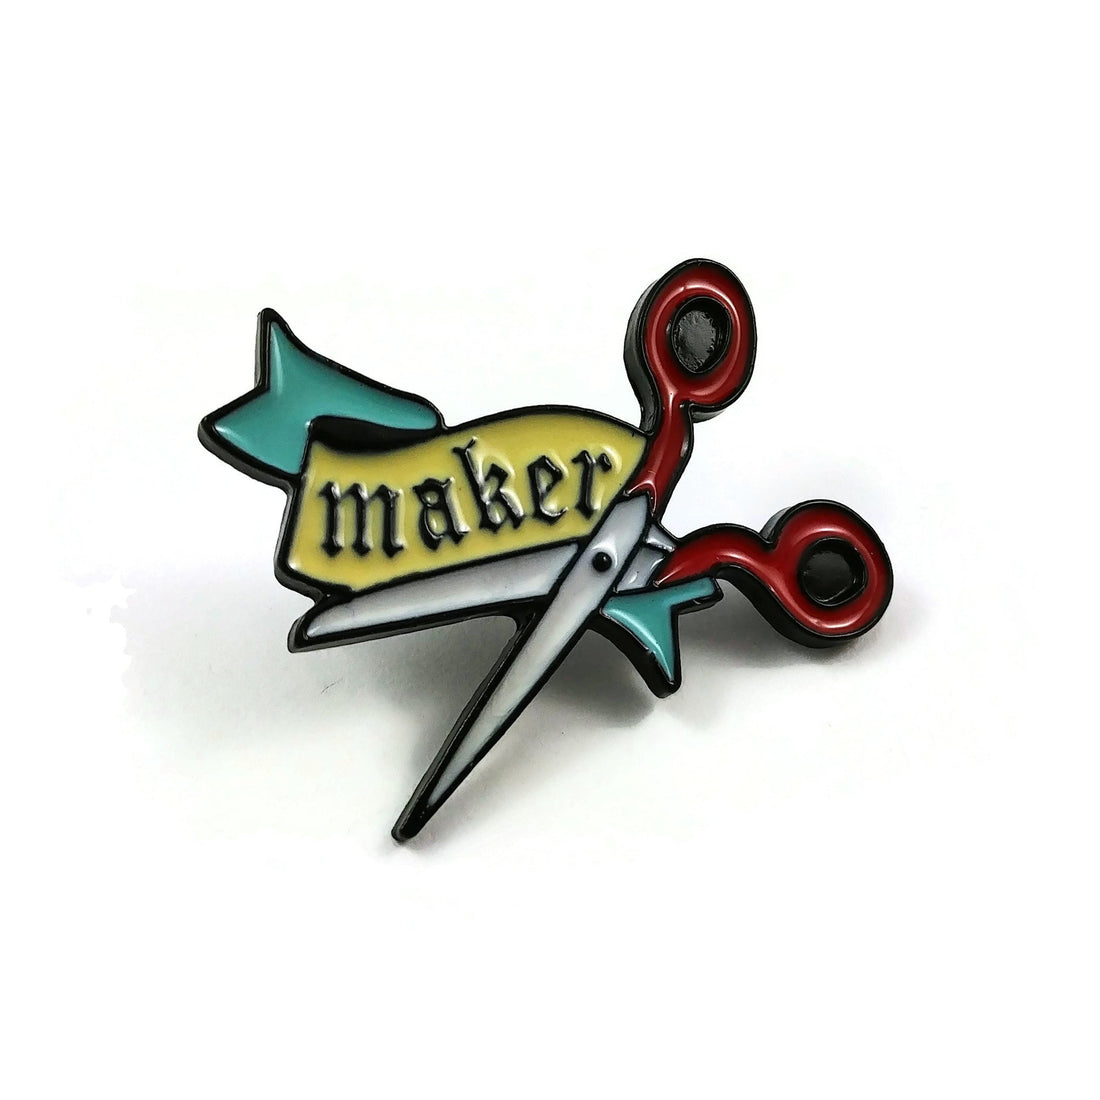 Maker scissors enamel pin, Sew lover brooch, Cute gift for crafter